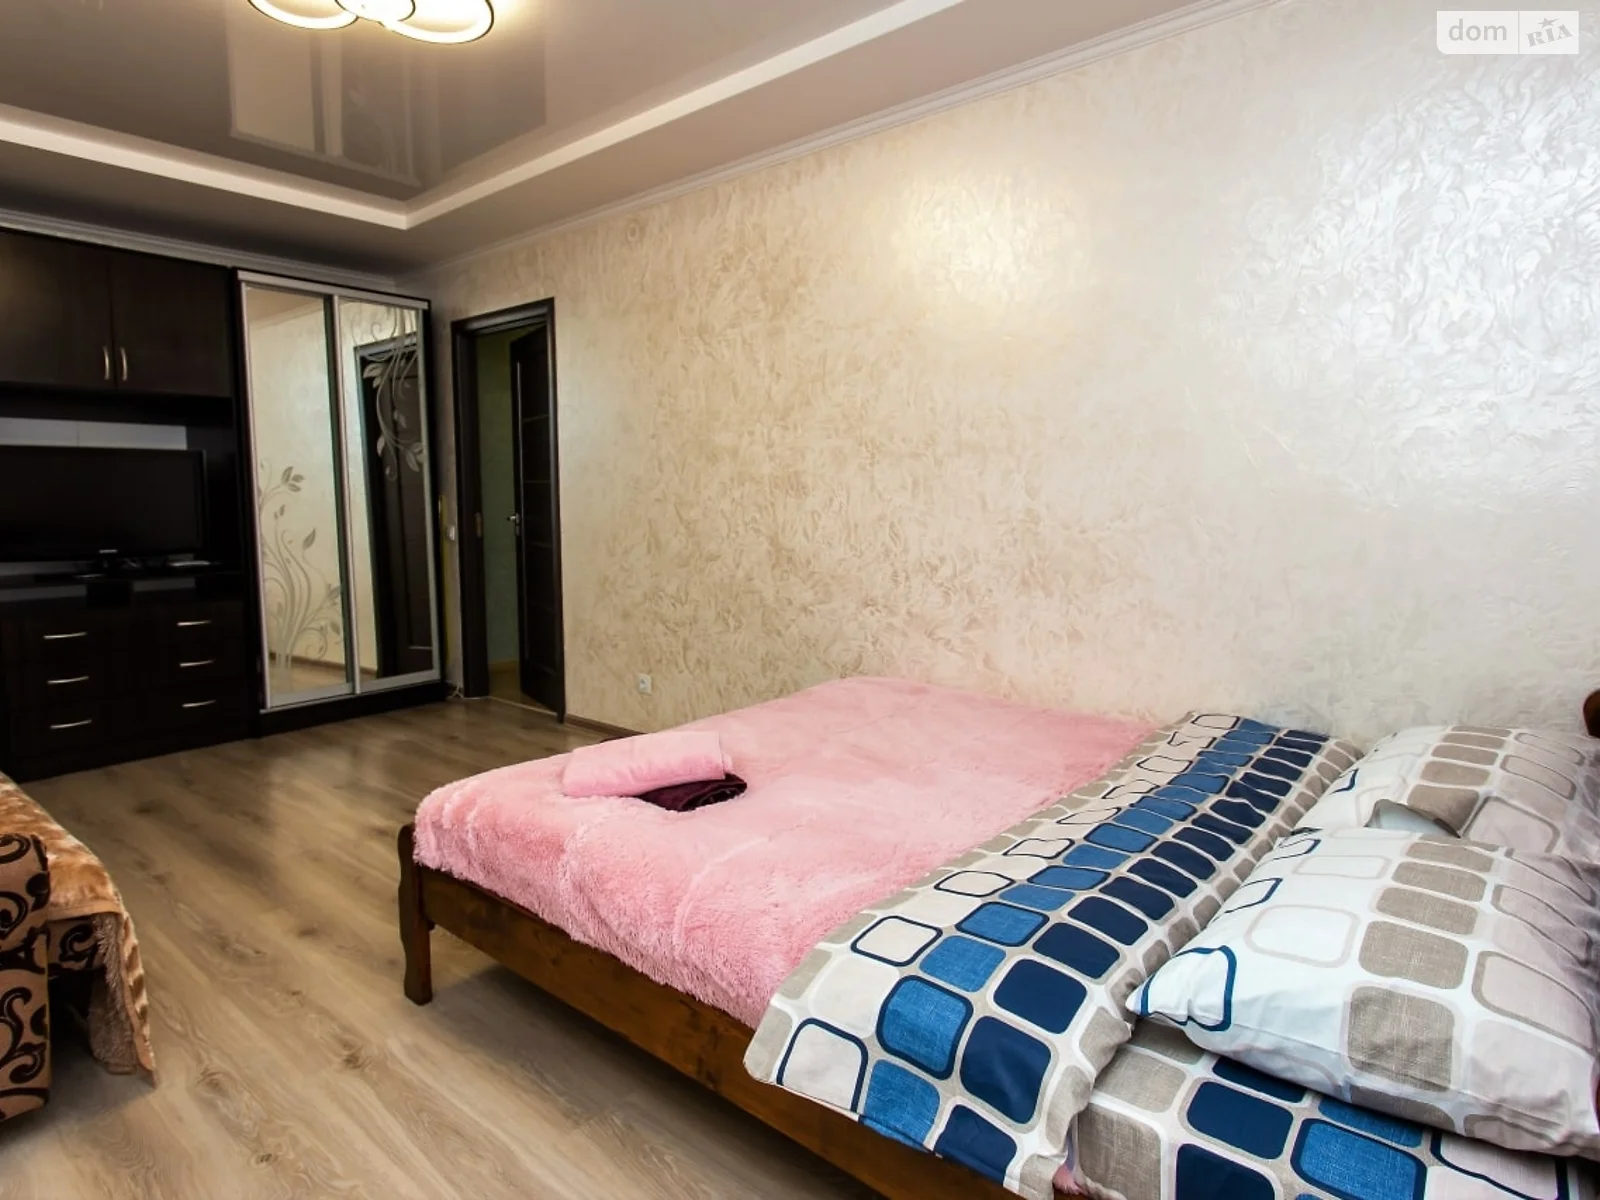 1-кімнатна квартира у Тернополі, цена: 850 грн - фото 1